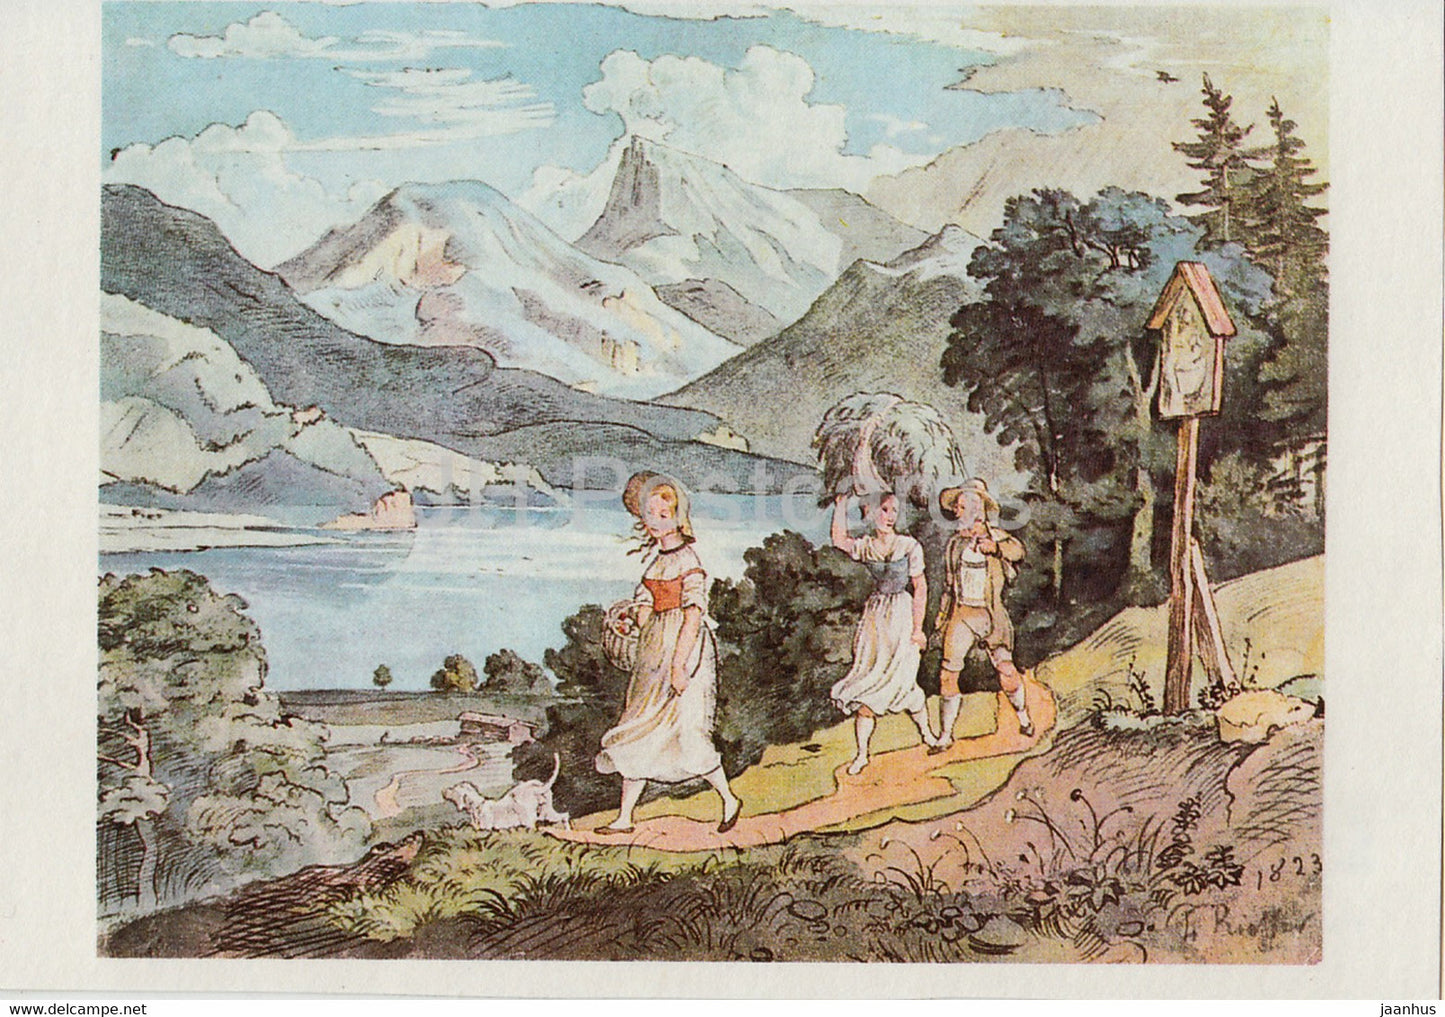 painting by Ludwig Richter - Der Fuschlsee im Salzkammergut - German art - Germany - unused - JH Postcards